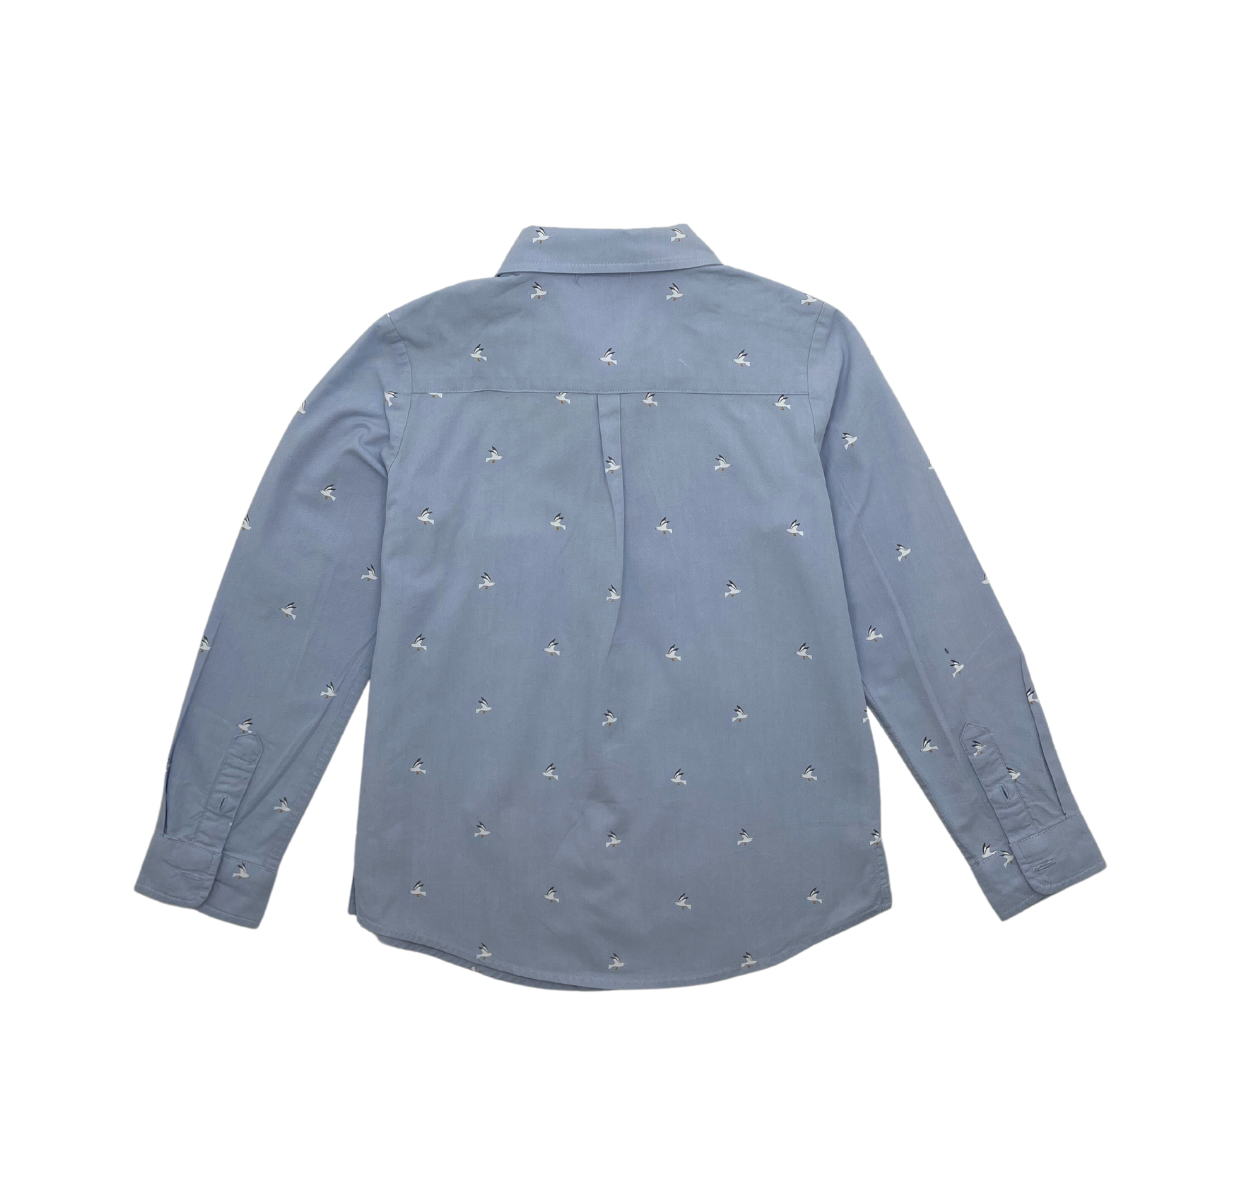 JACADI - Shirt with bird motifs - 6 years old